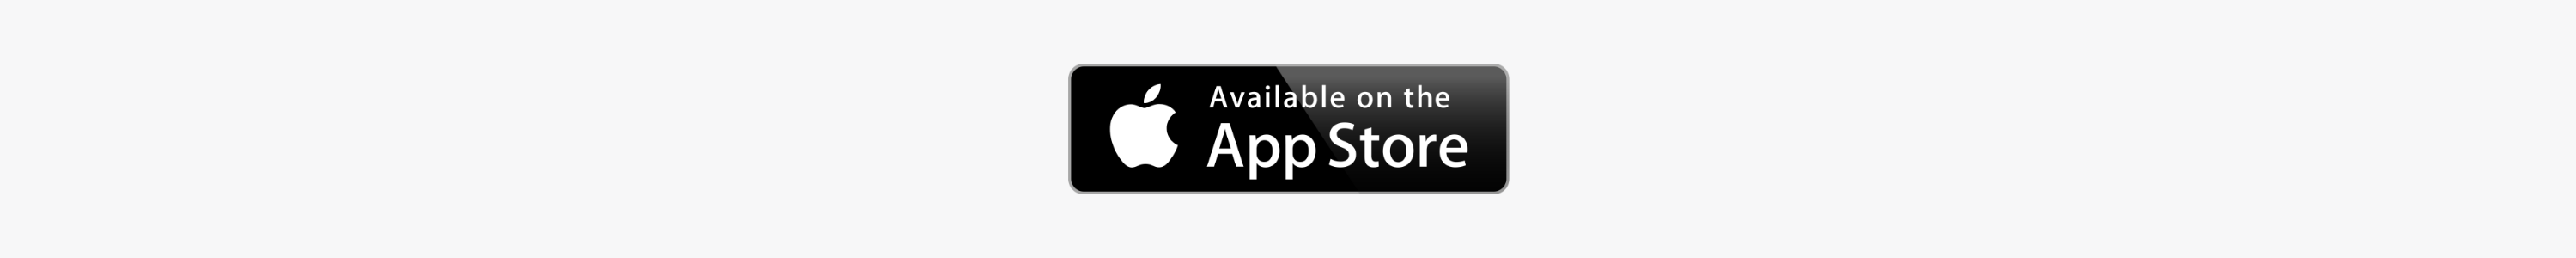 shopback-hiw_app-download_appstore